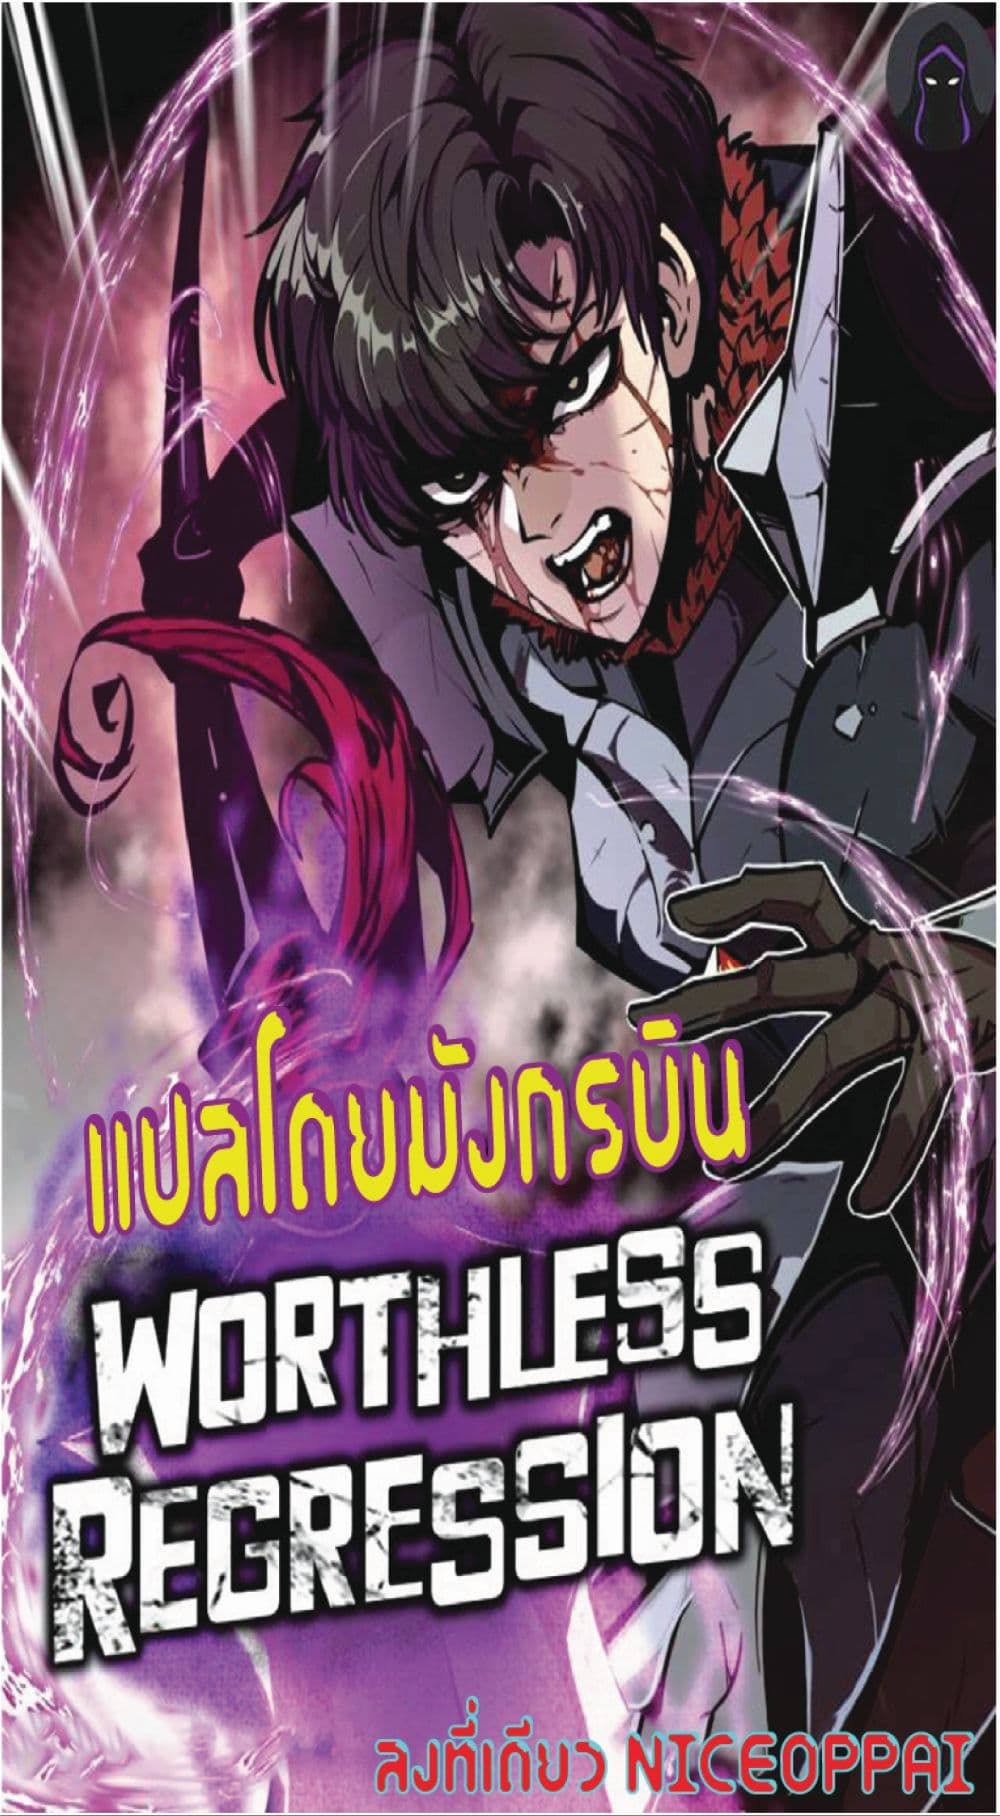 Worthless Regression 14 01